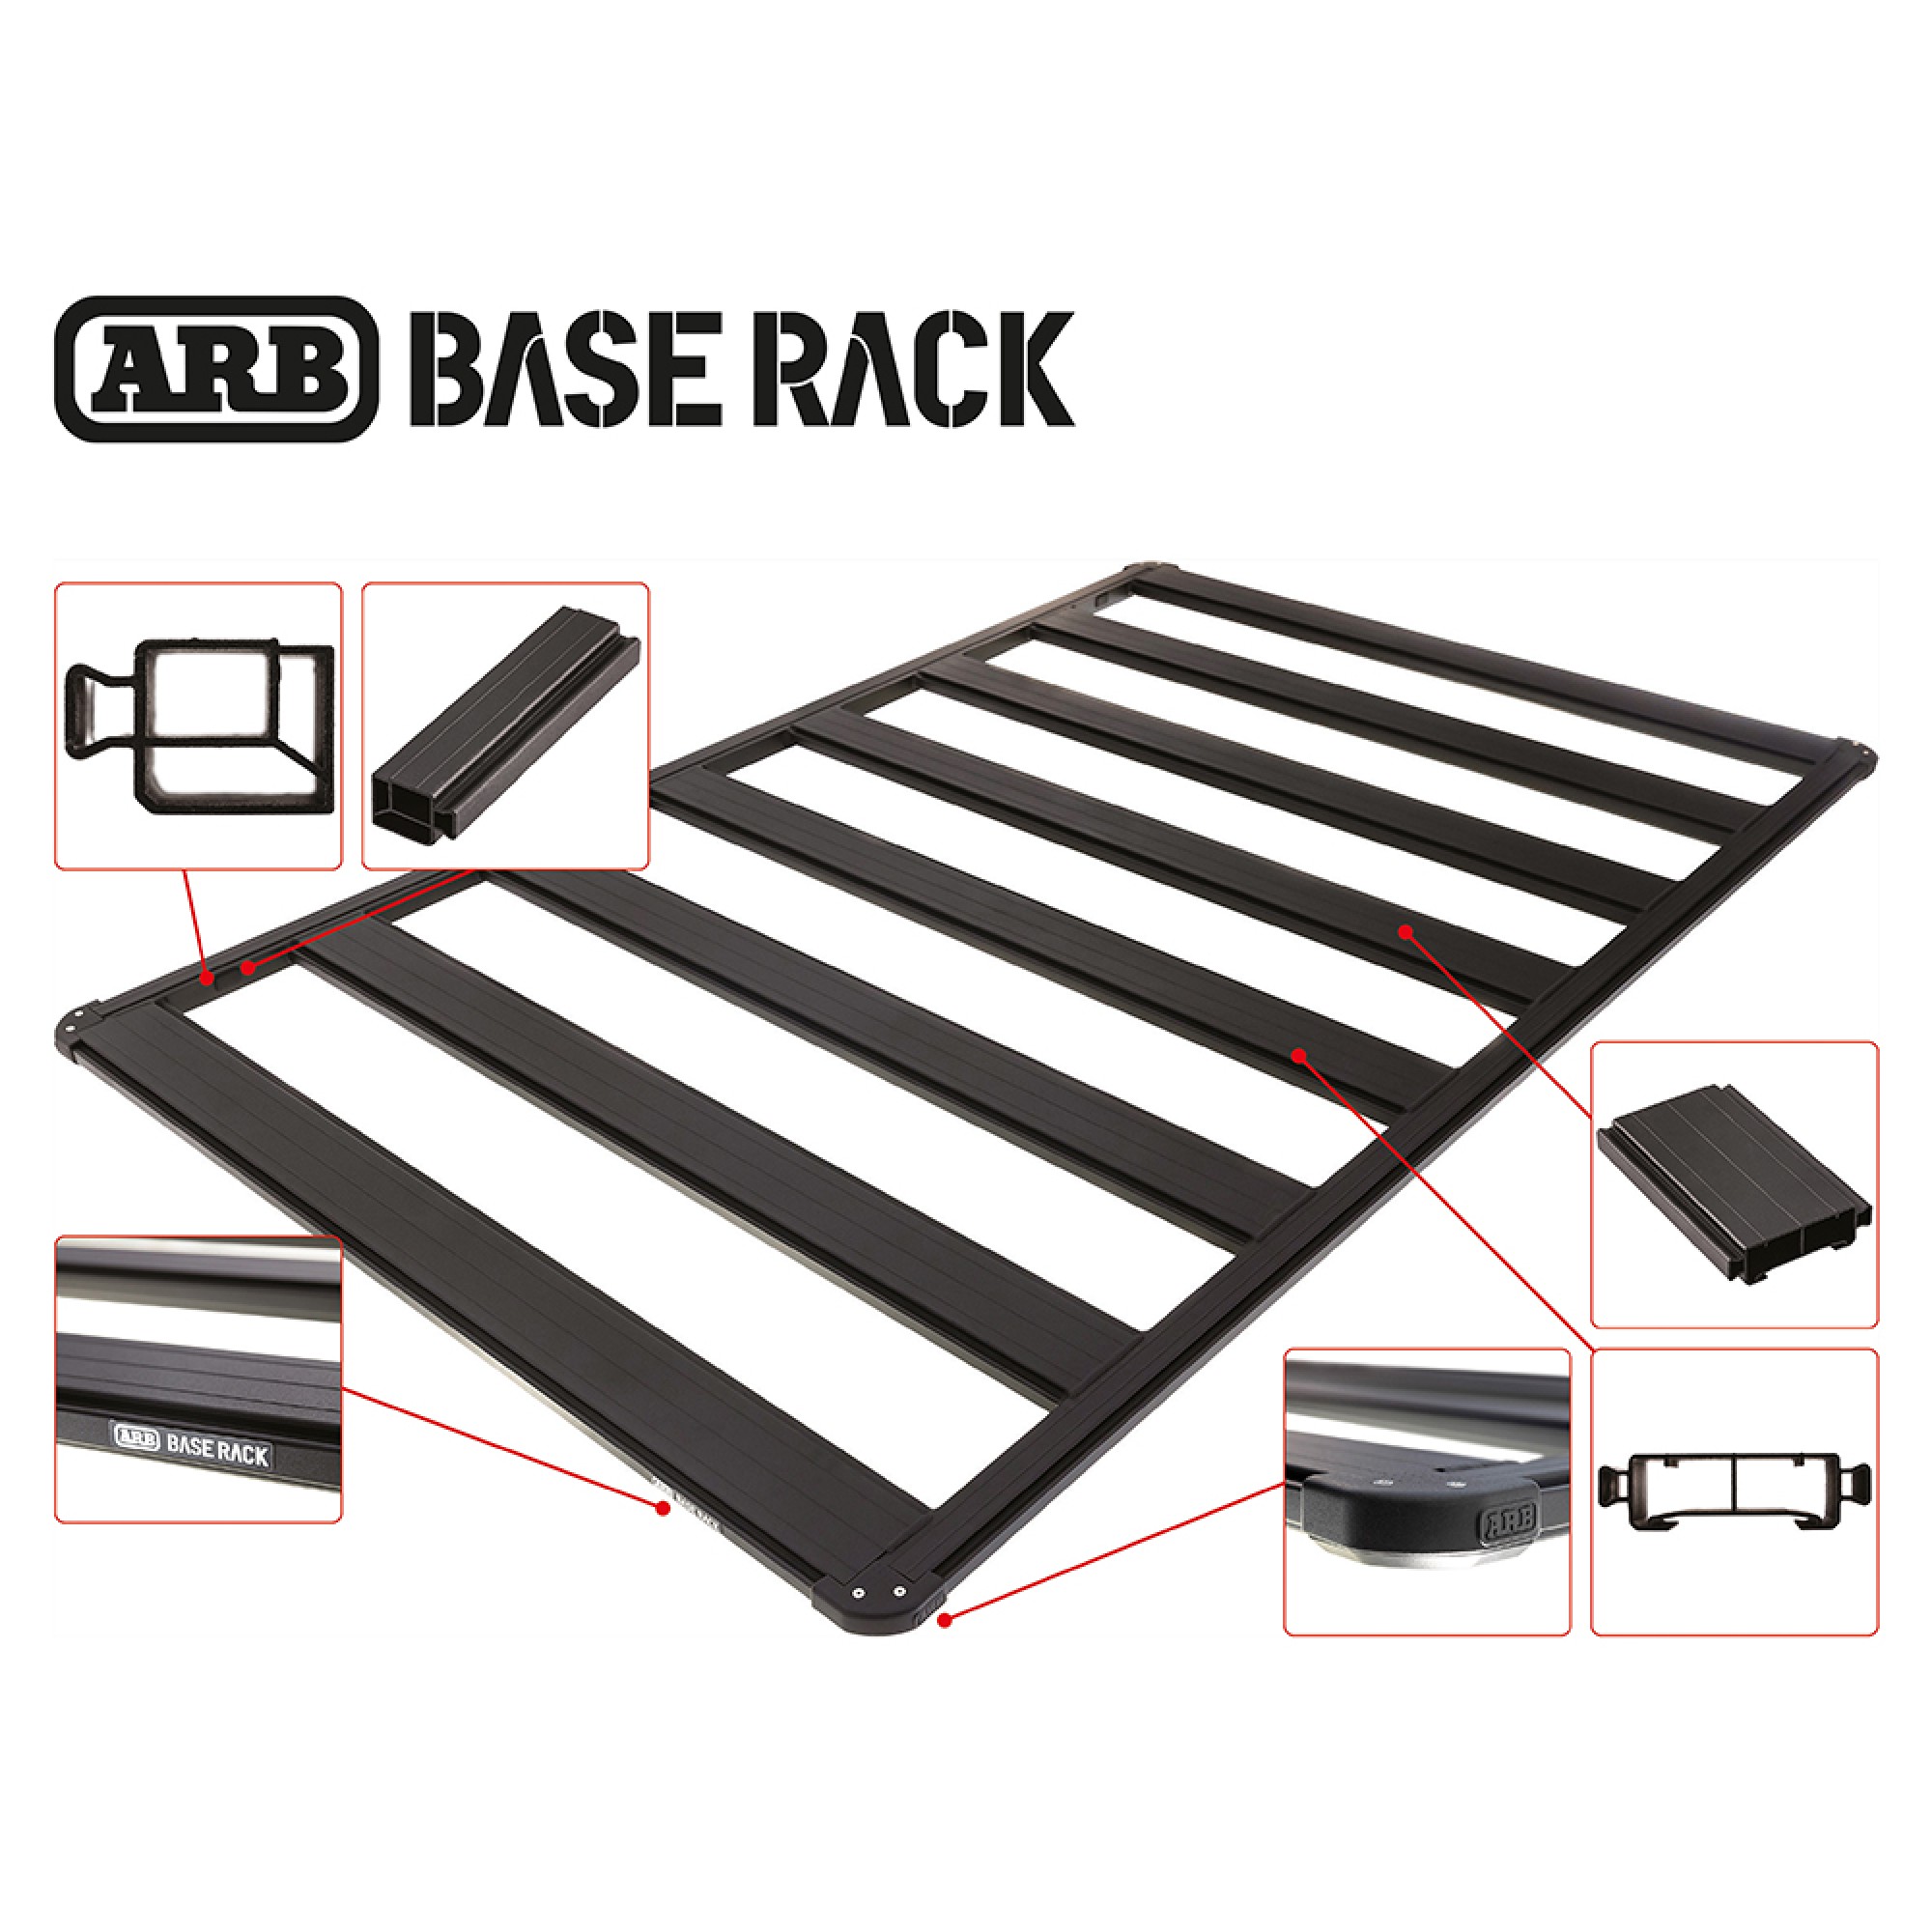 ARB Defender Base Rack 1835 x 1285 mm 7 Beam Requires 17900010 Or 17900050 Base Rack 6 Leg Fitting Kit